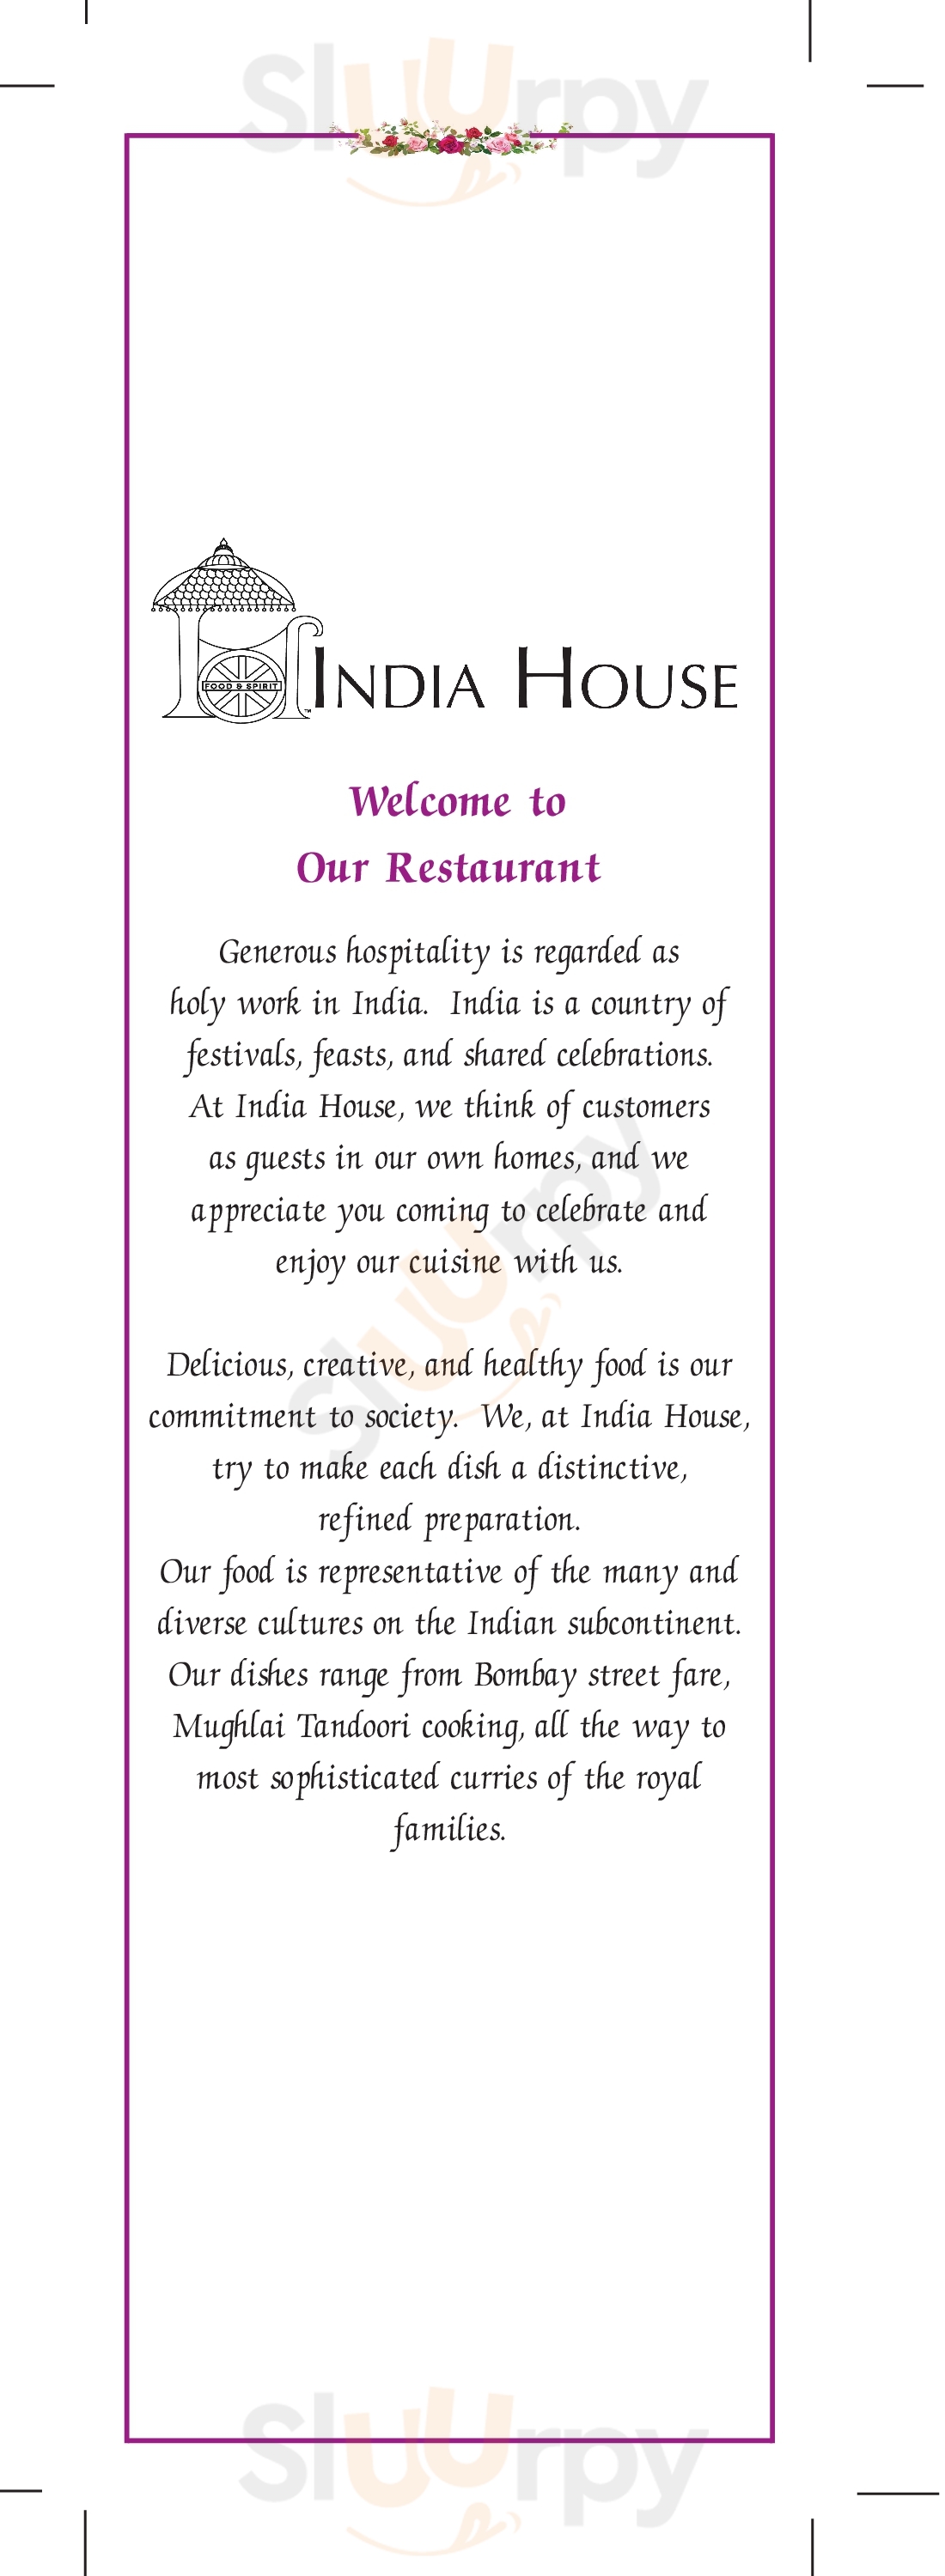 India House Restaurant Schaumburg Menu - 1